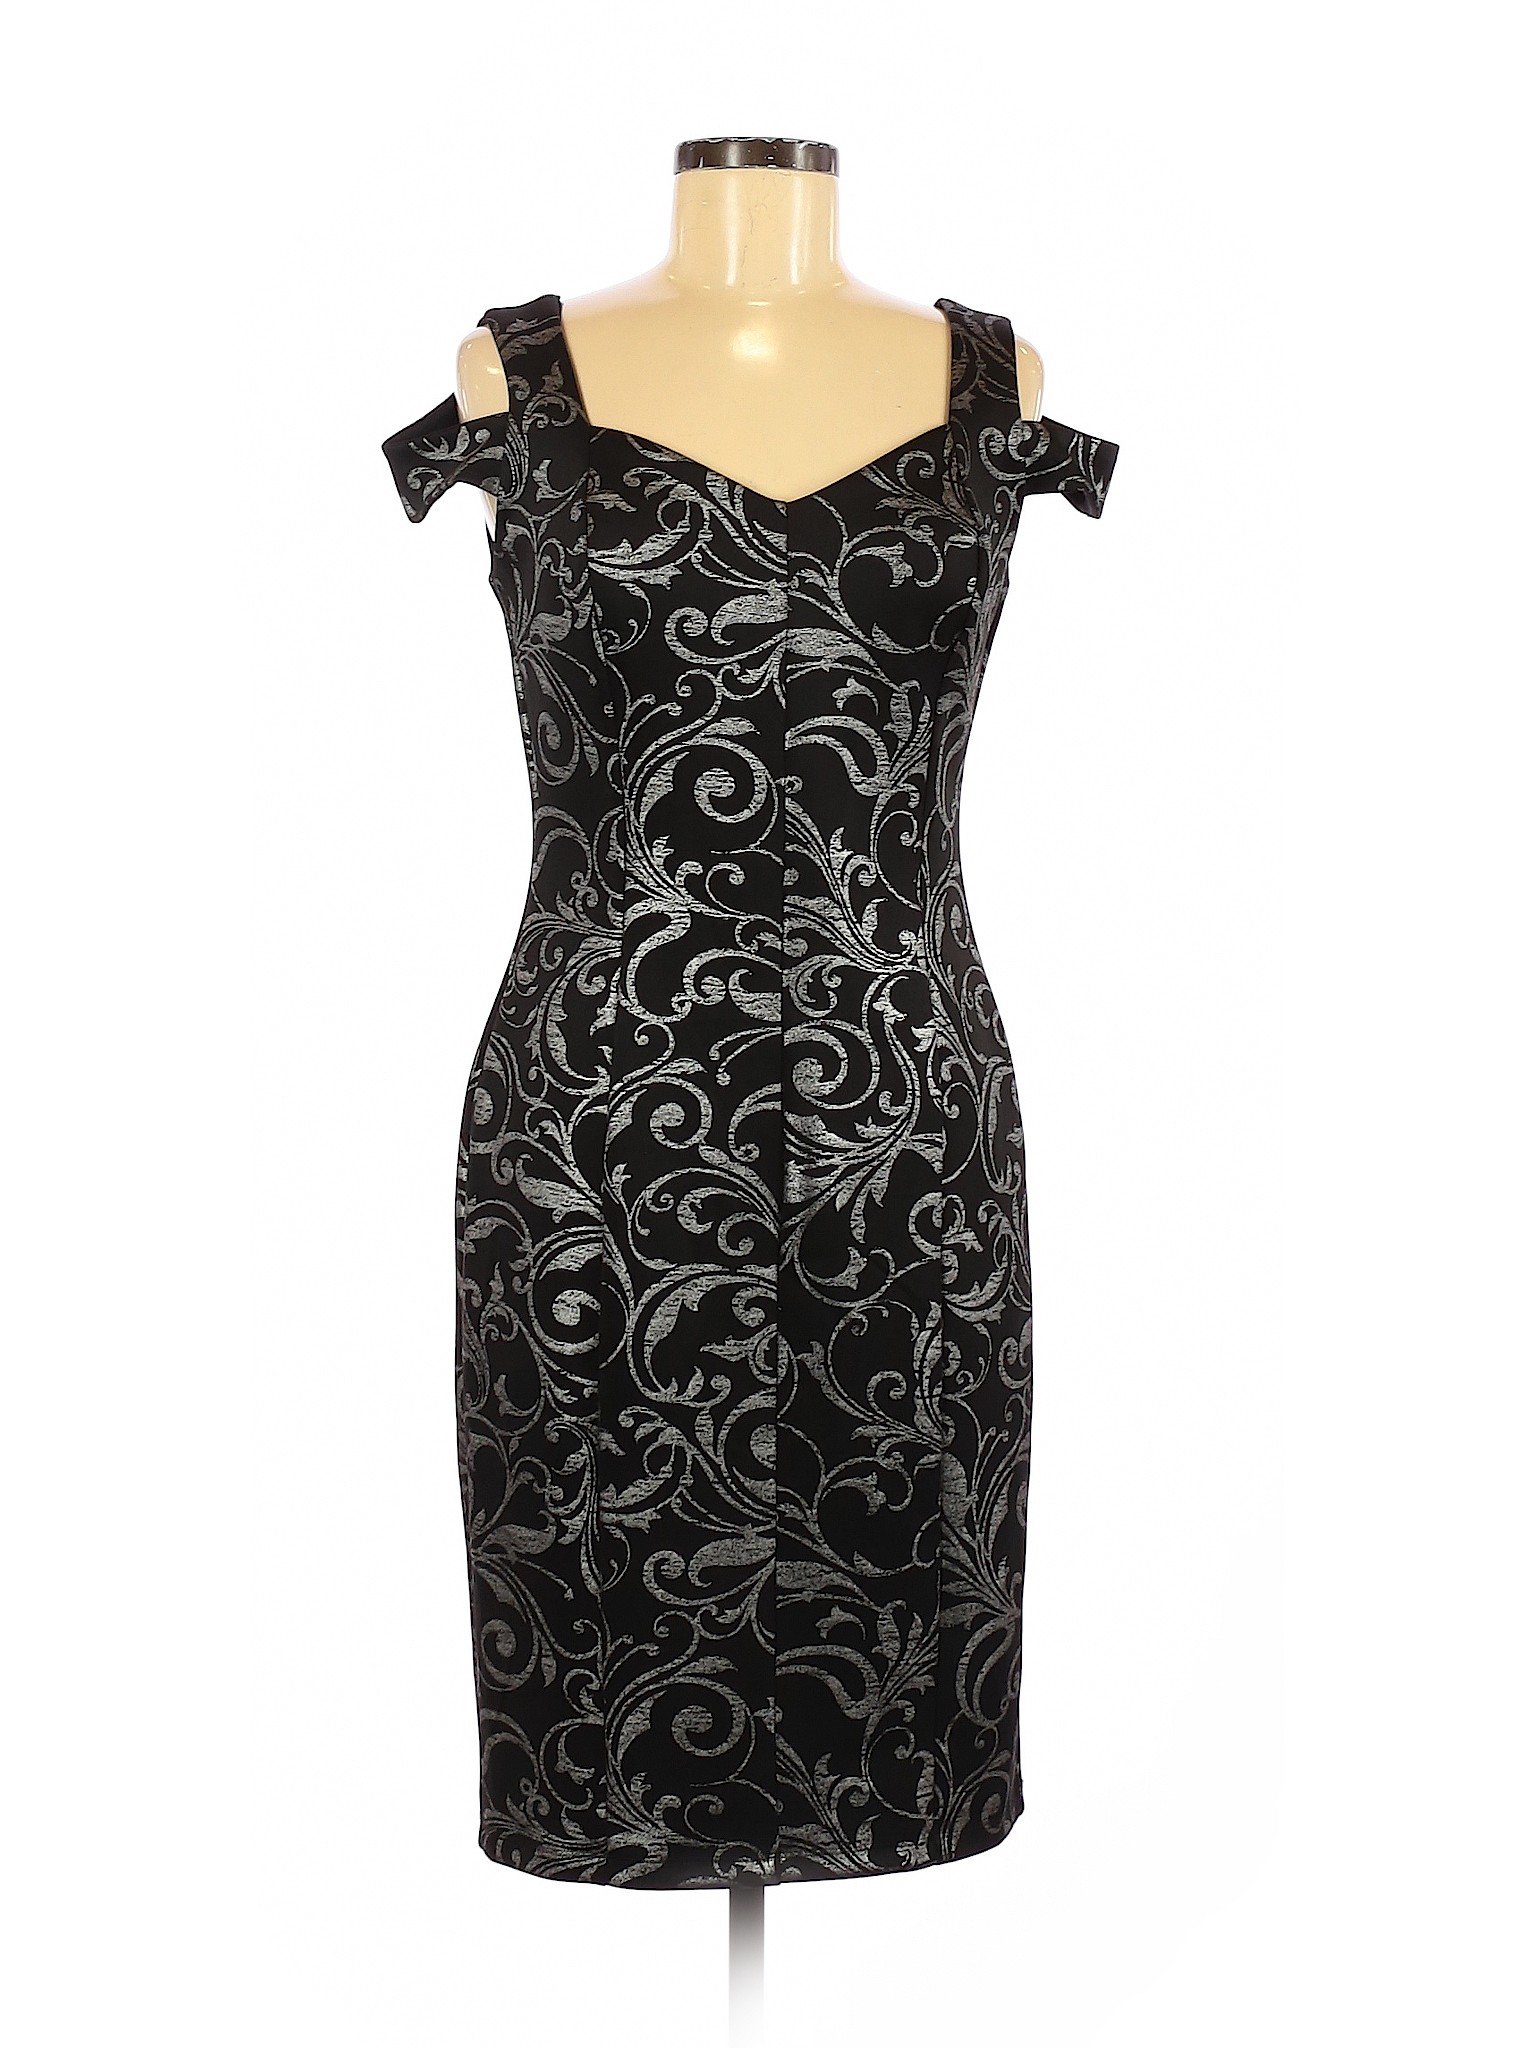 NWT En Focus Studio Women Black Cocktail Dress 8 | eBay